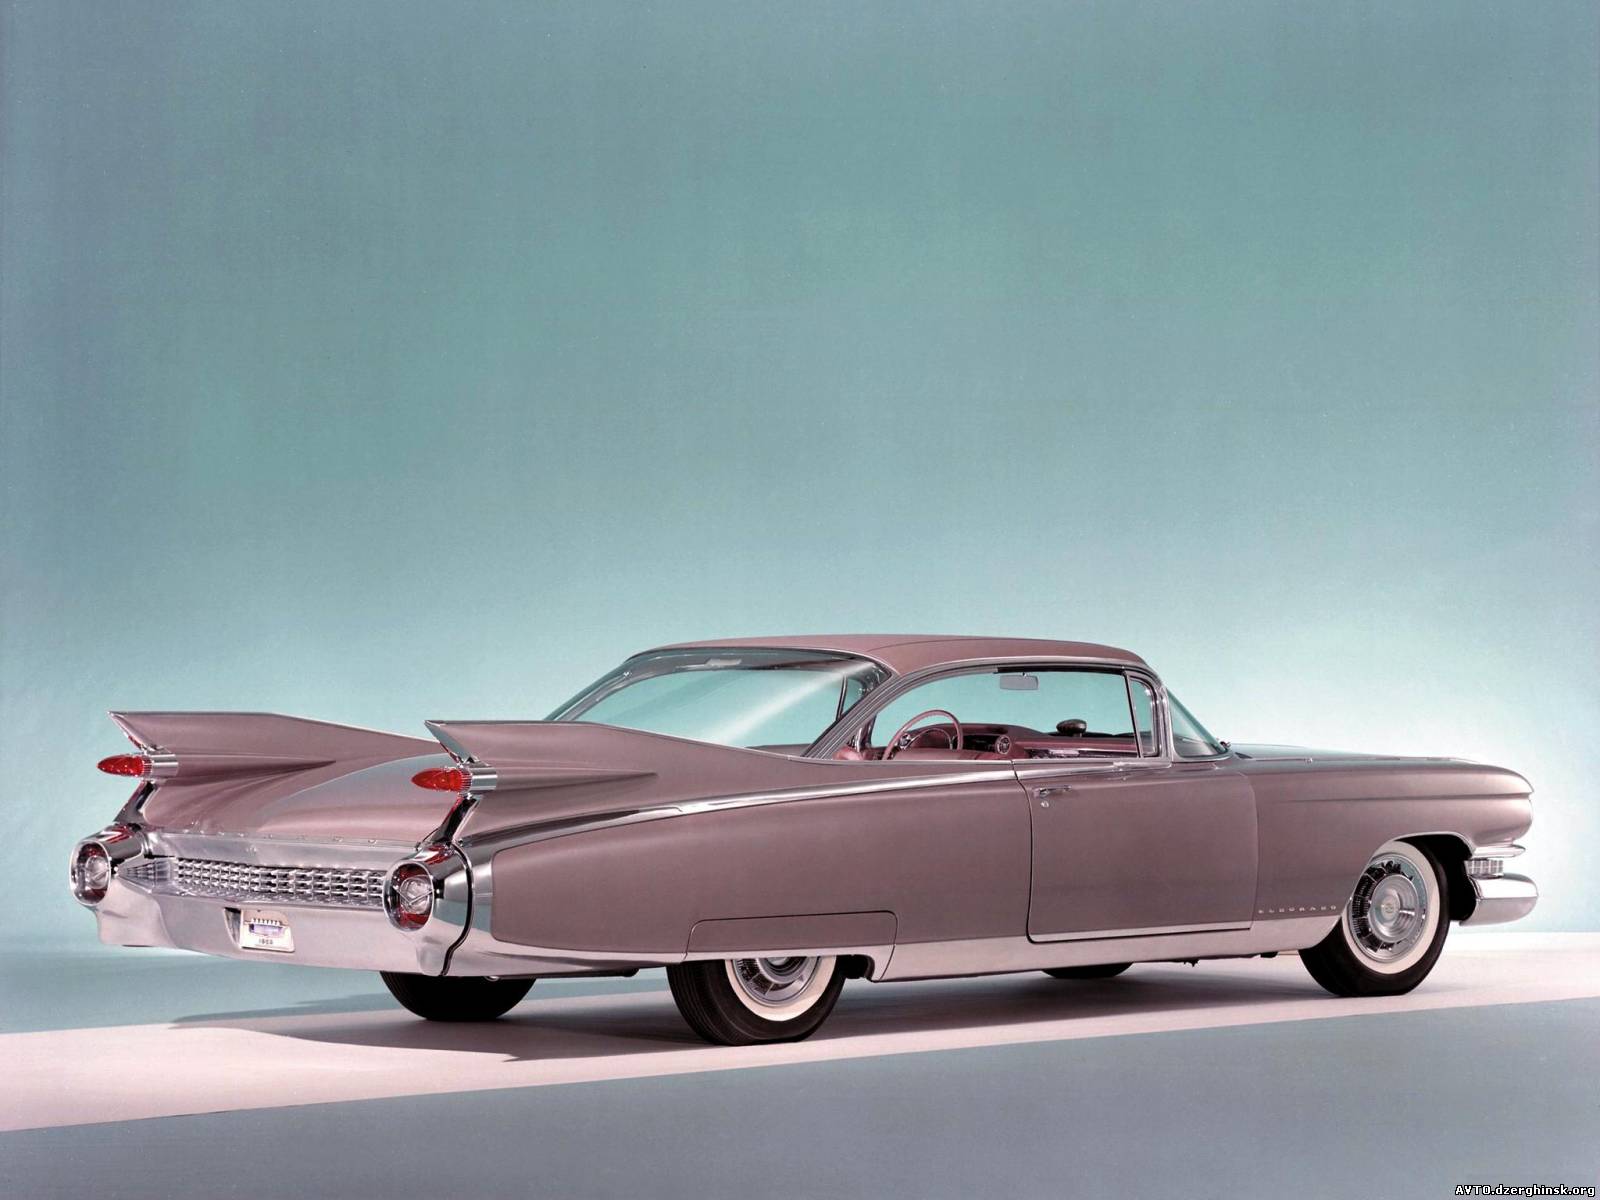 066. Cadillac Eldorado Seville 1959